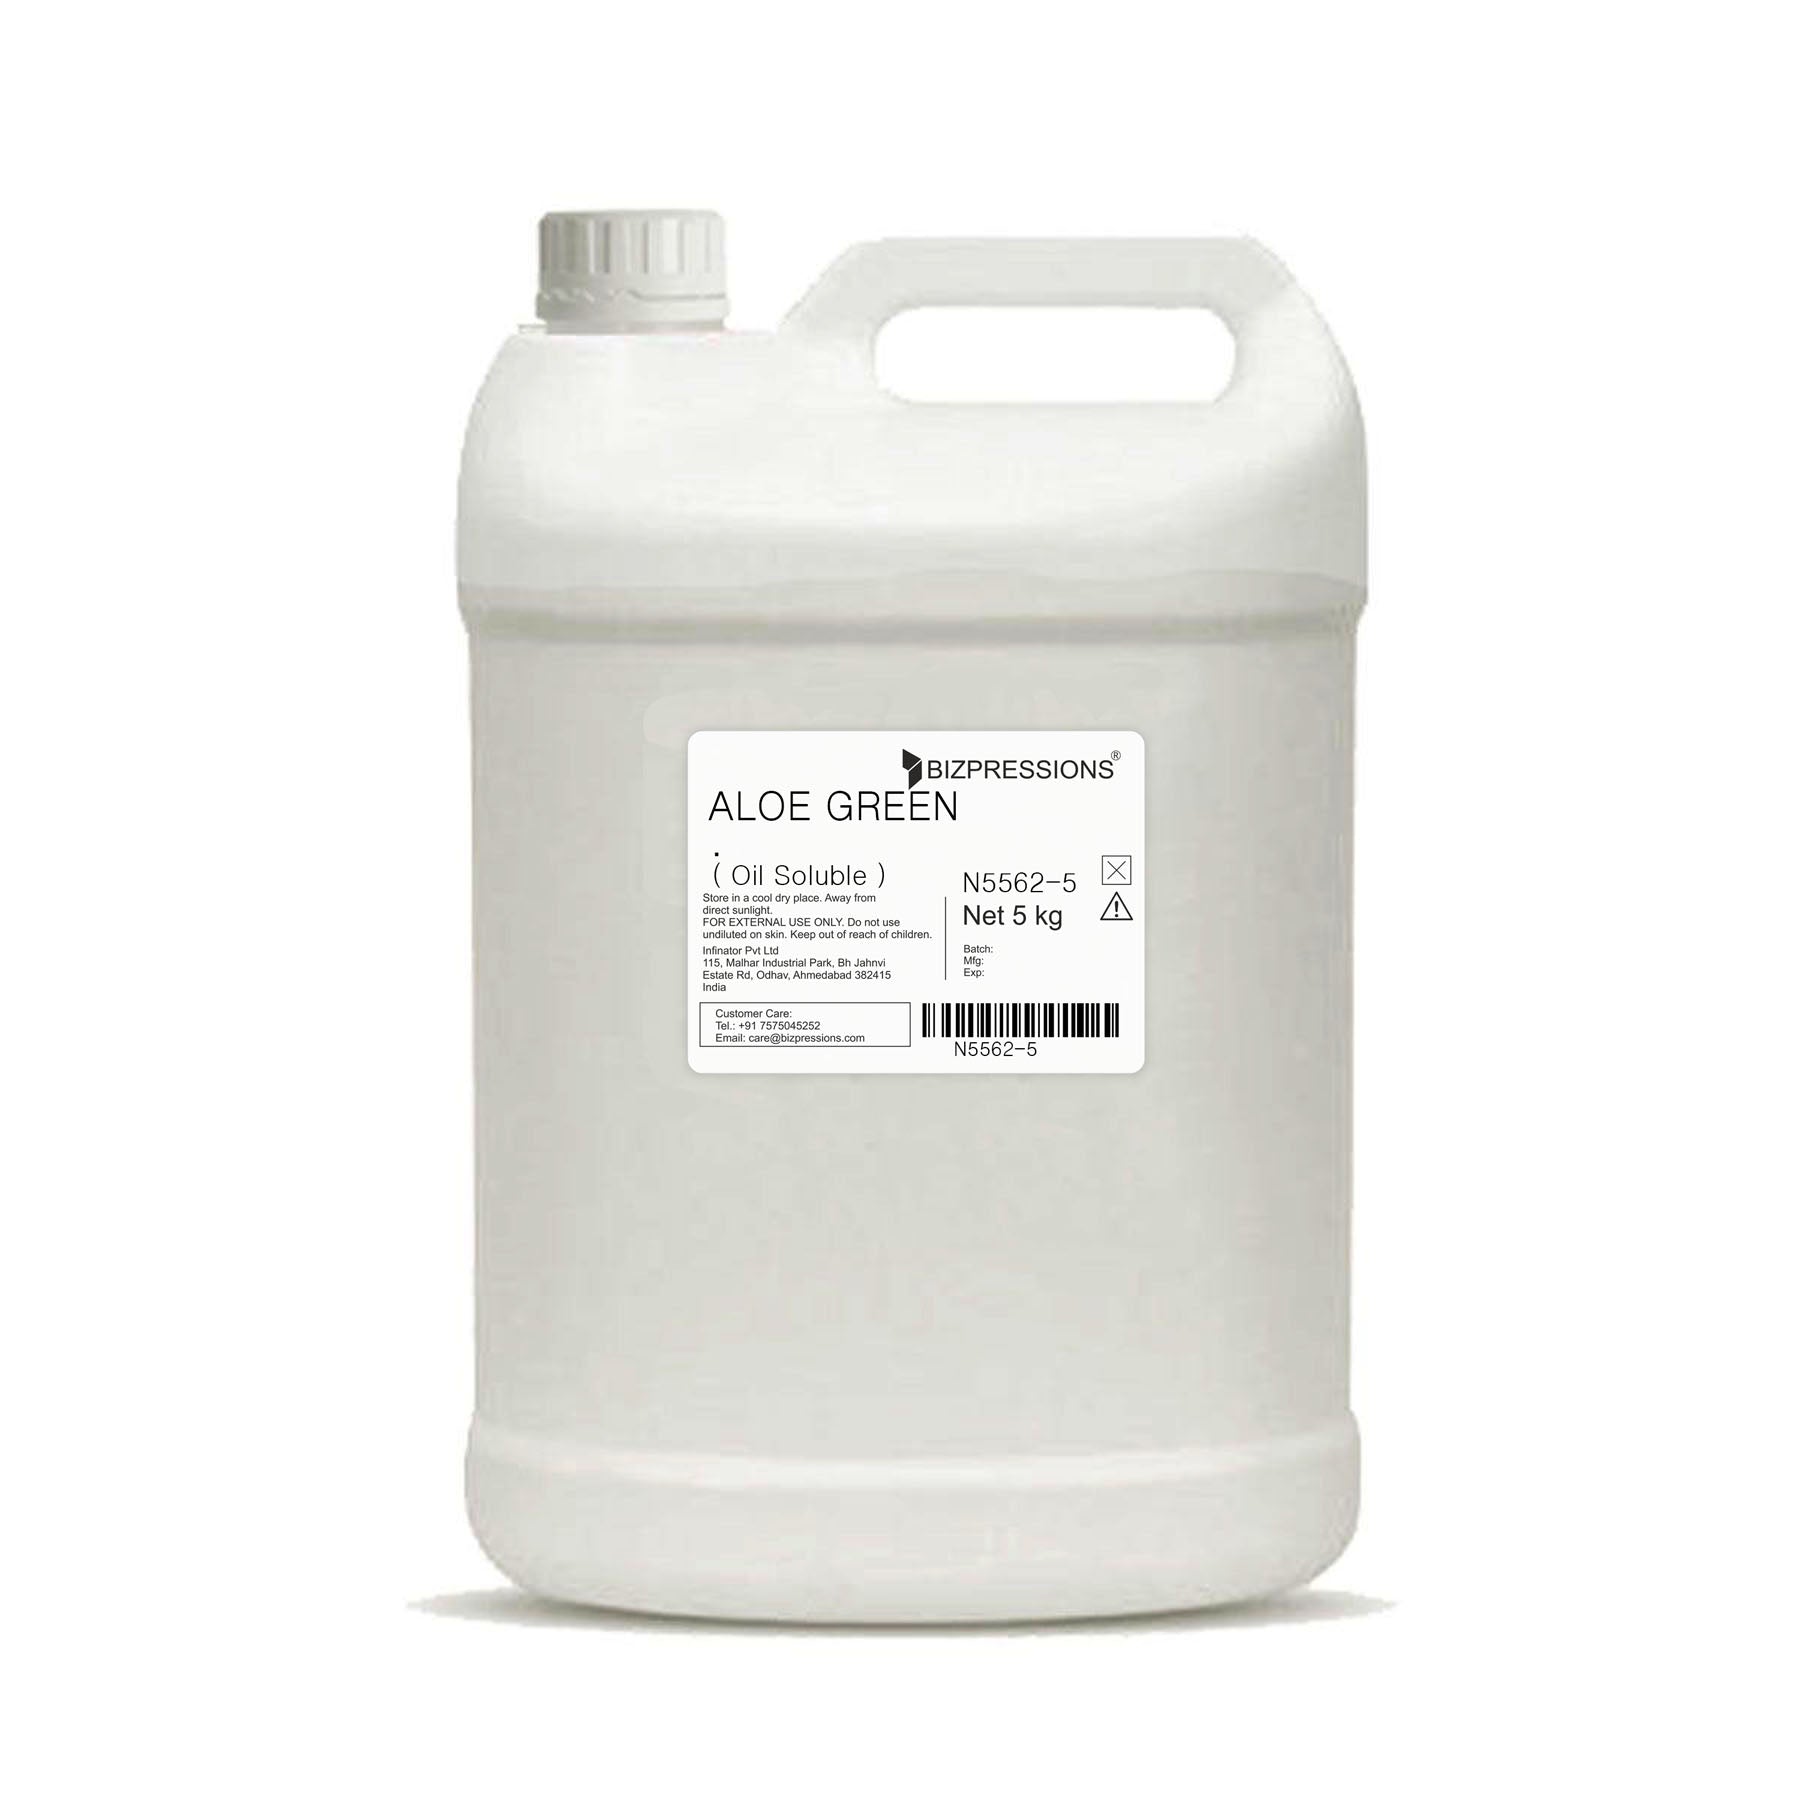 ALOE GREEN - Fragrance ( Oil Soluble ) - 5 kg